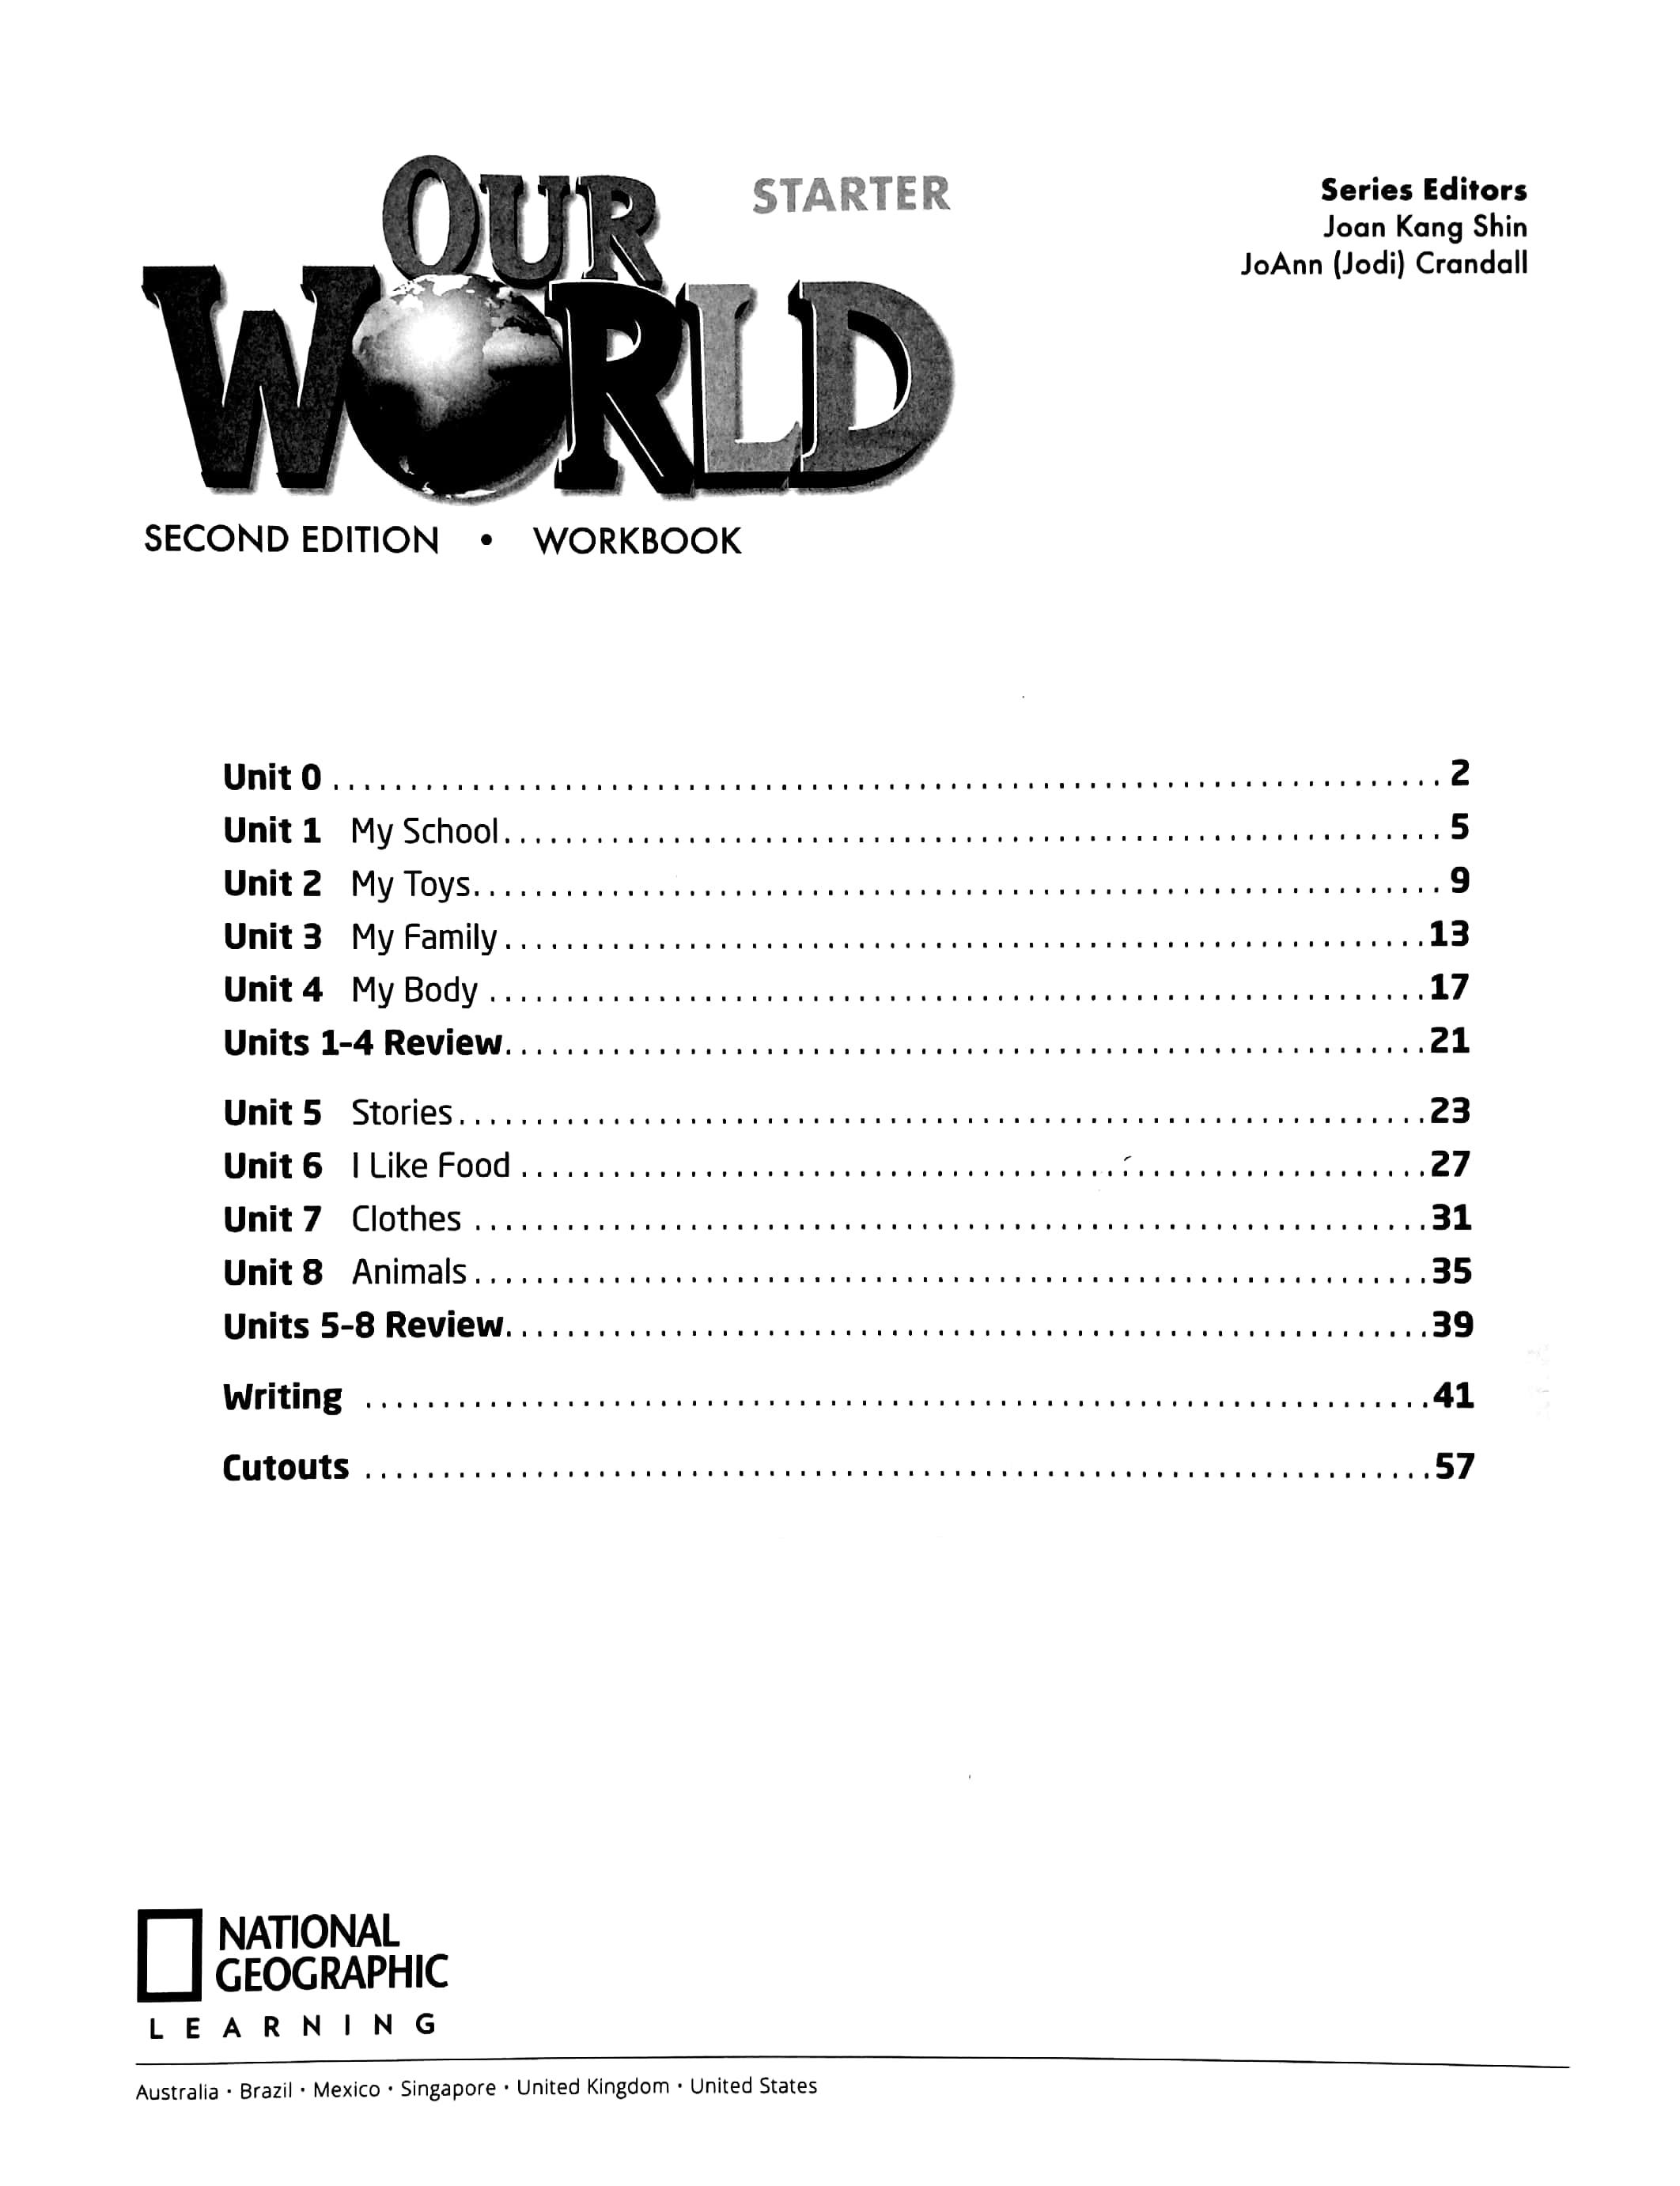 Hình ảnh Our World Starter Workbook 2nd Edition (American English)